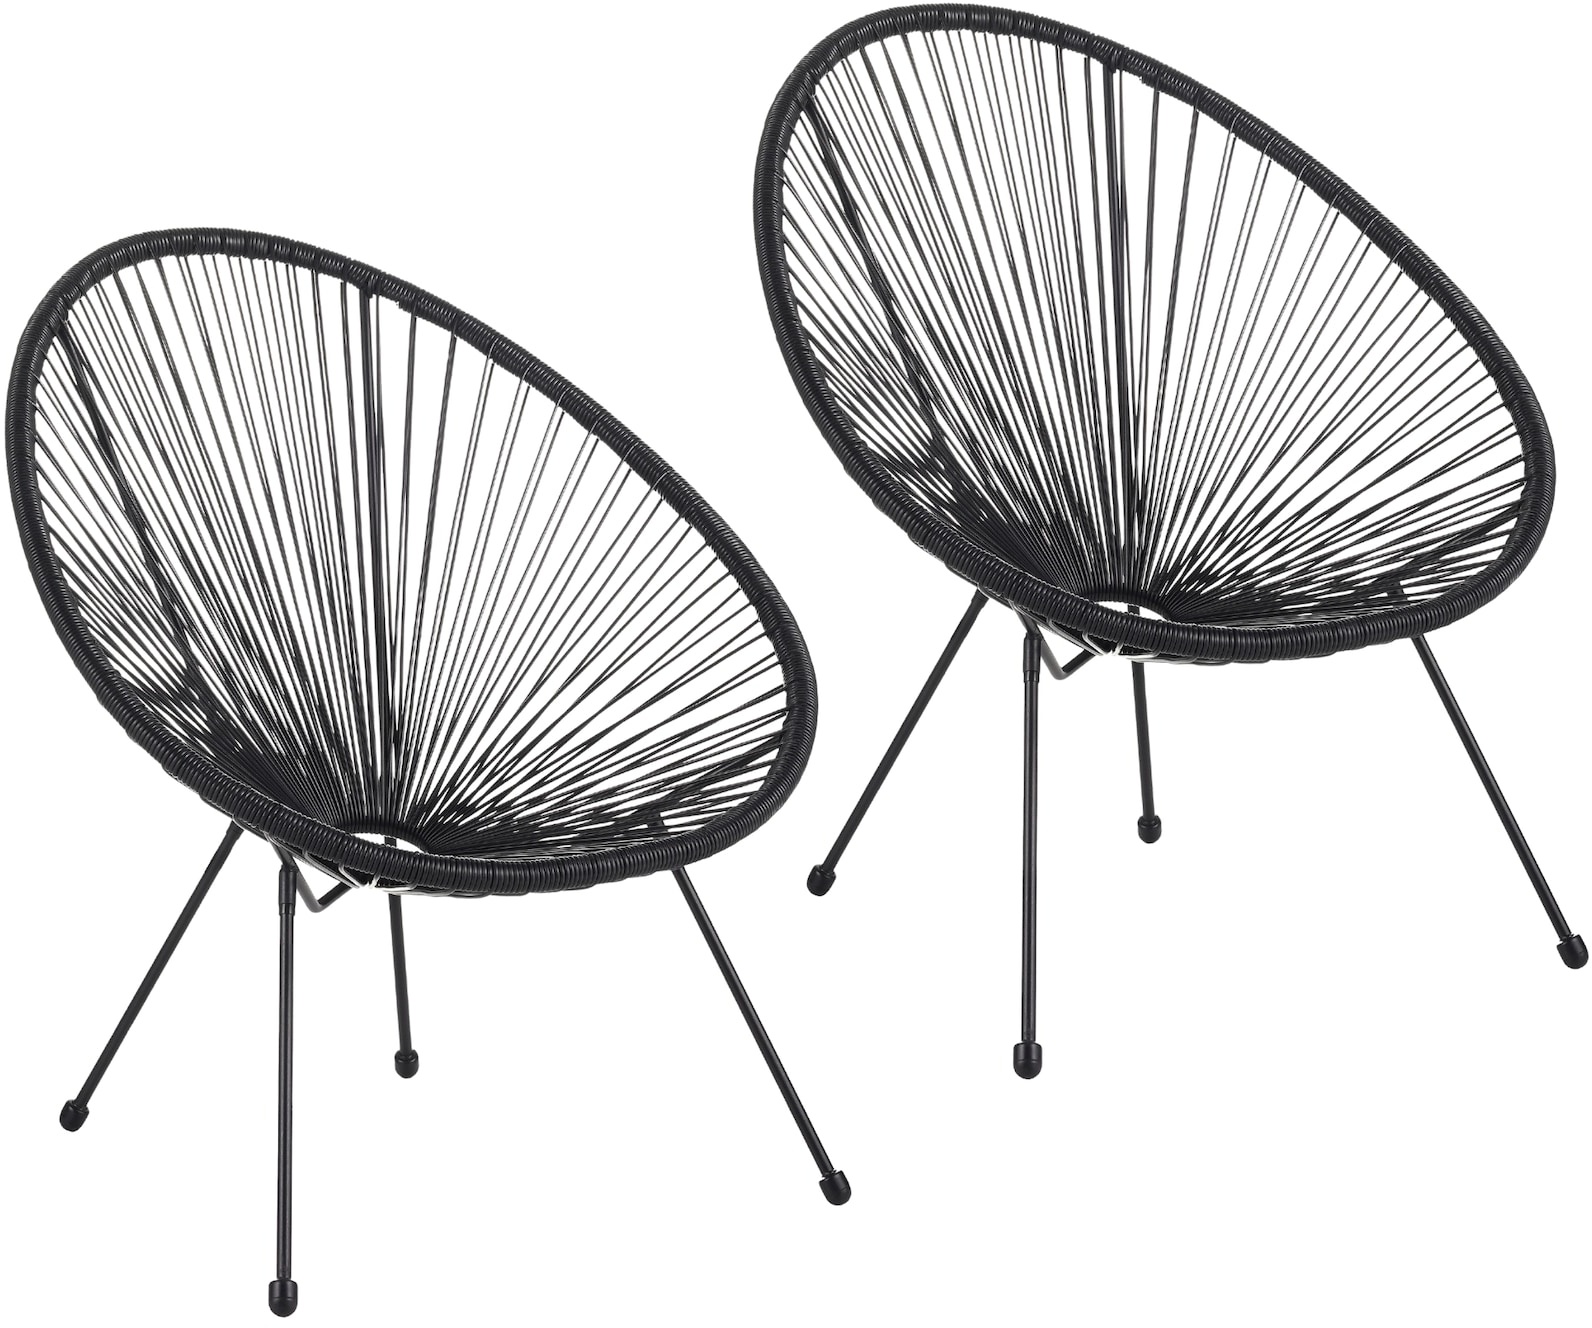 Albatros Acapulco Stuhl 2er Set schwarz – Gartenstuhl oder Balkon-Sessel im Ikonischen Design – Ergonomisch & bis 120 kg belastbar - Lounge Sessel Outdoor oder Indoor, Relaxsessel